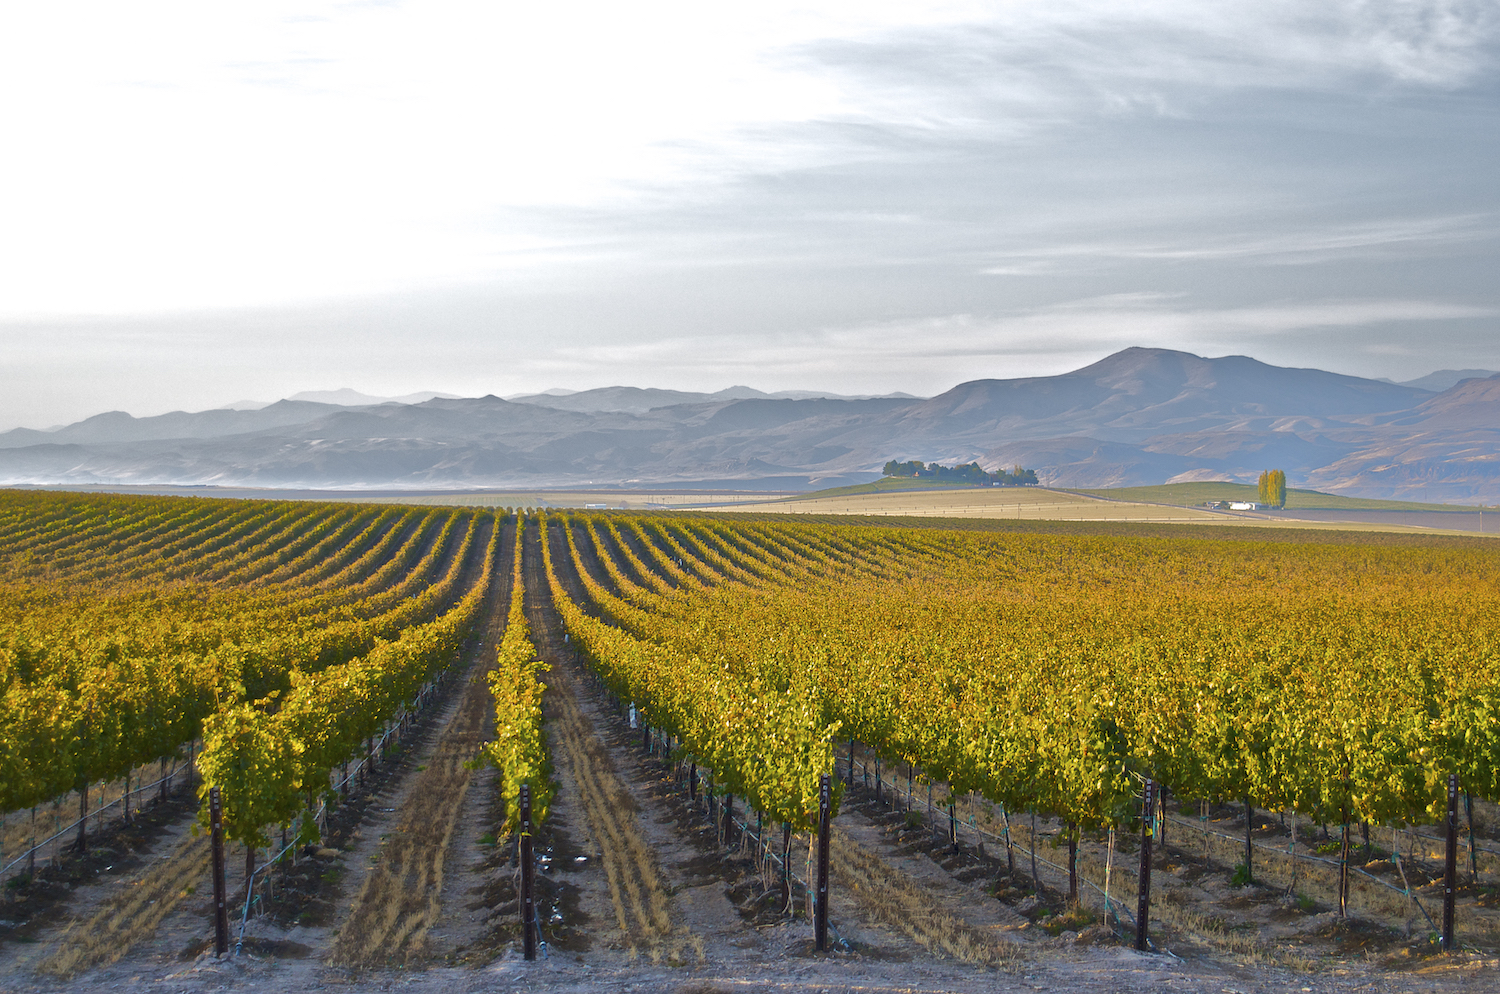 Vineyards in Idaho run by women.